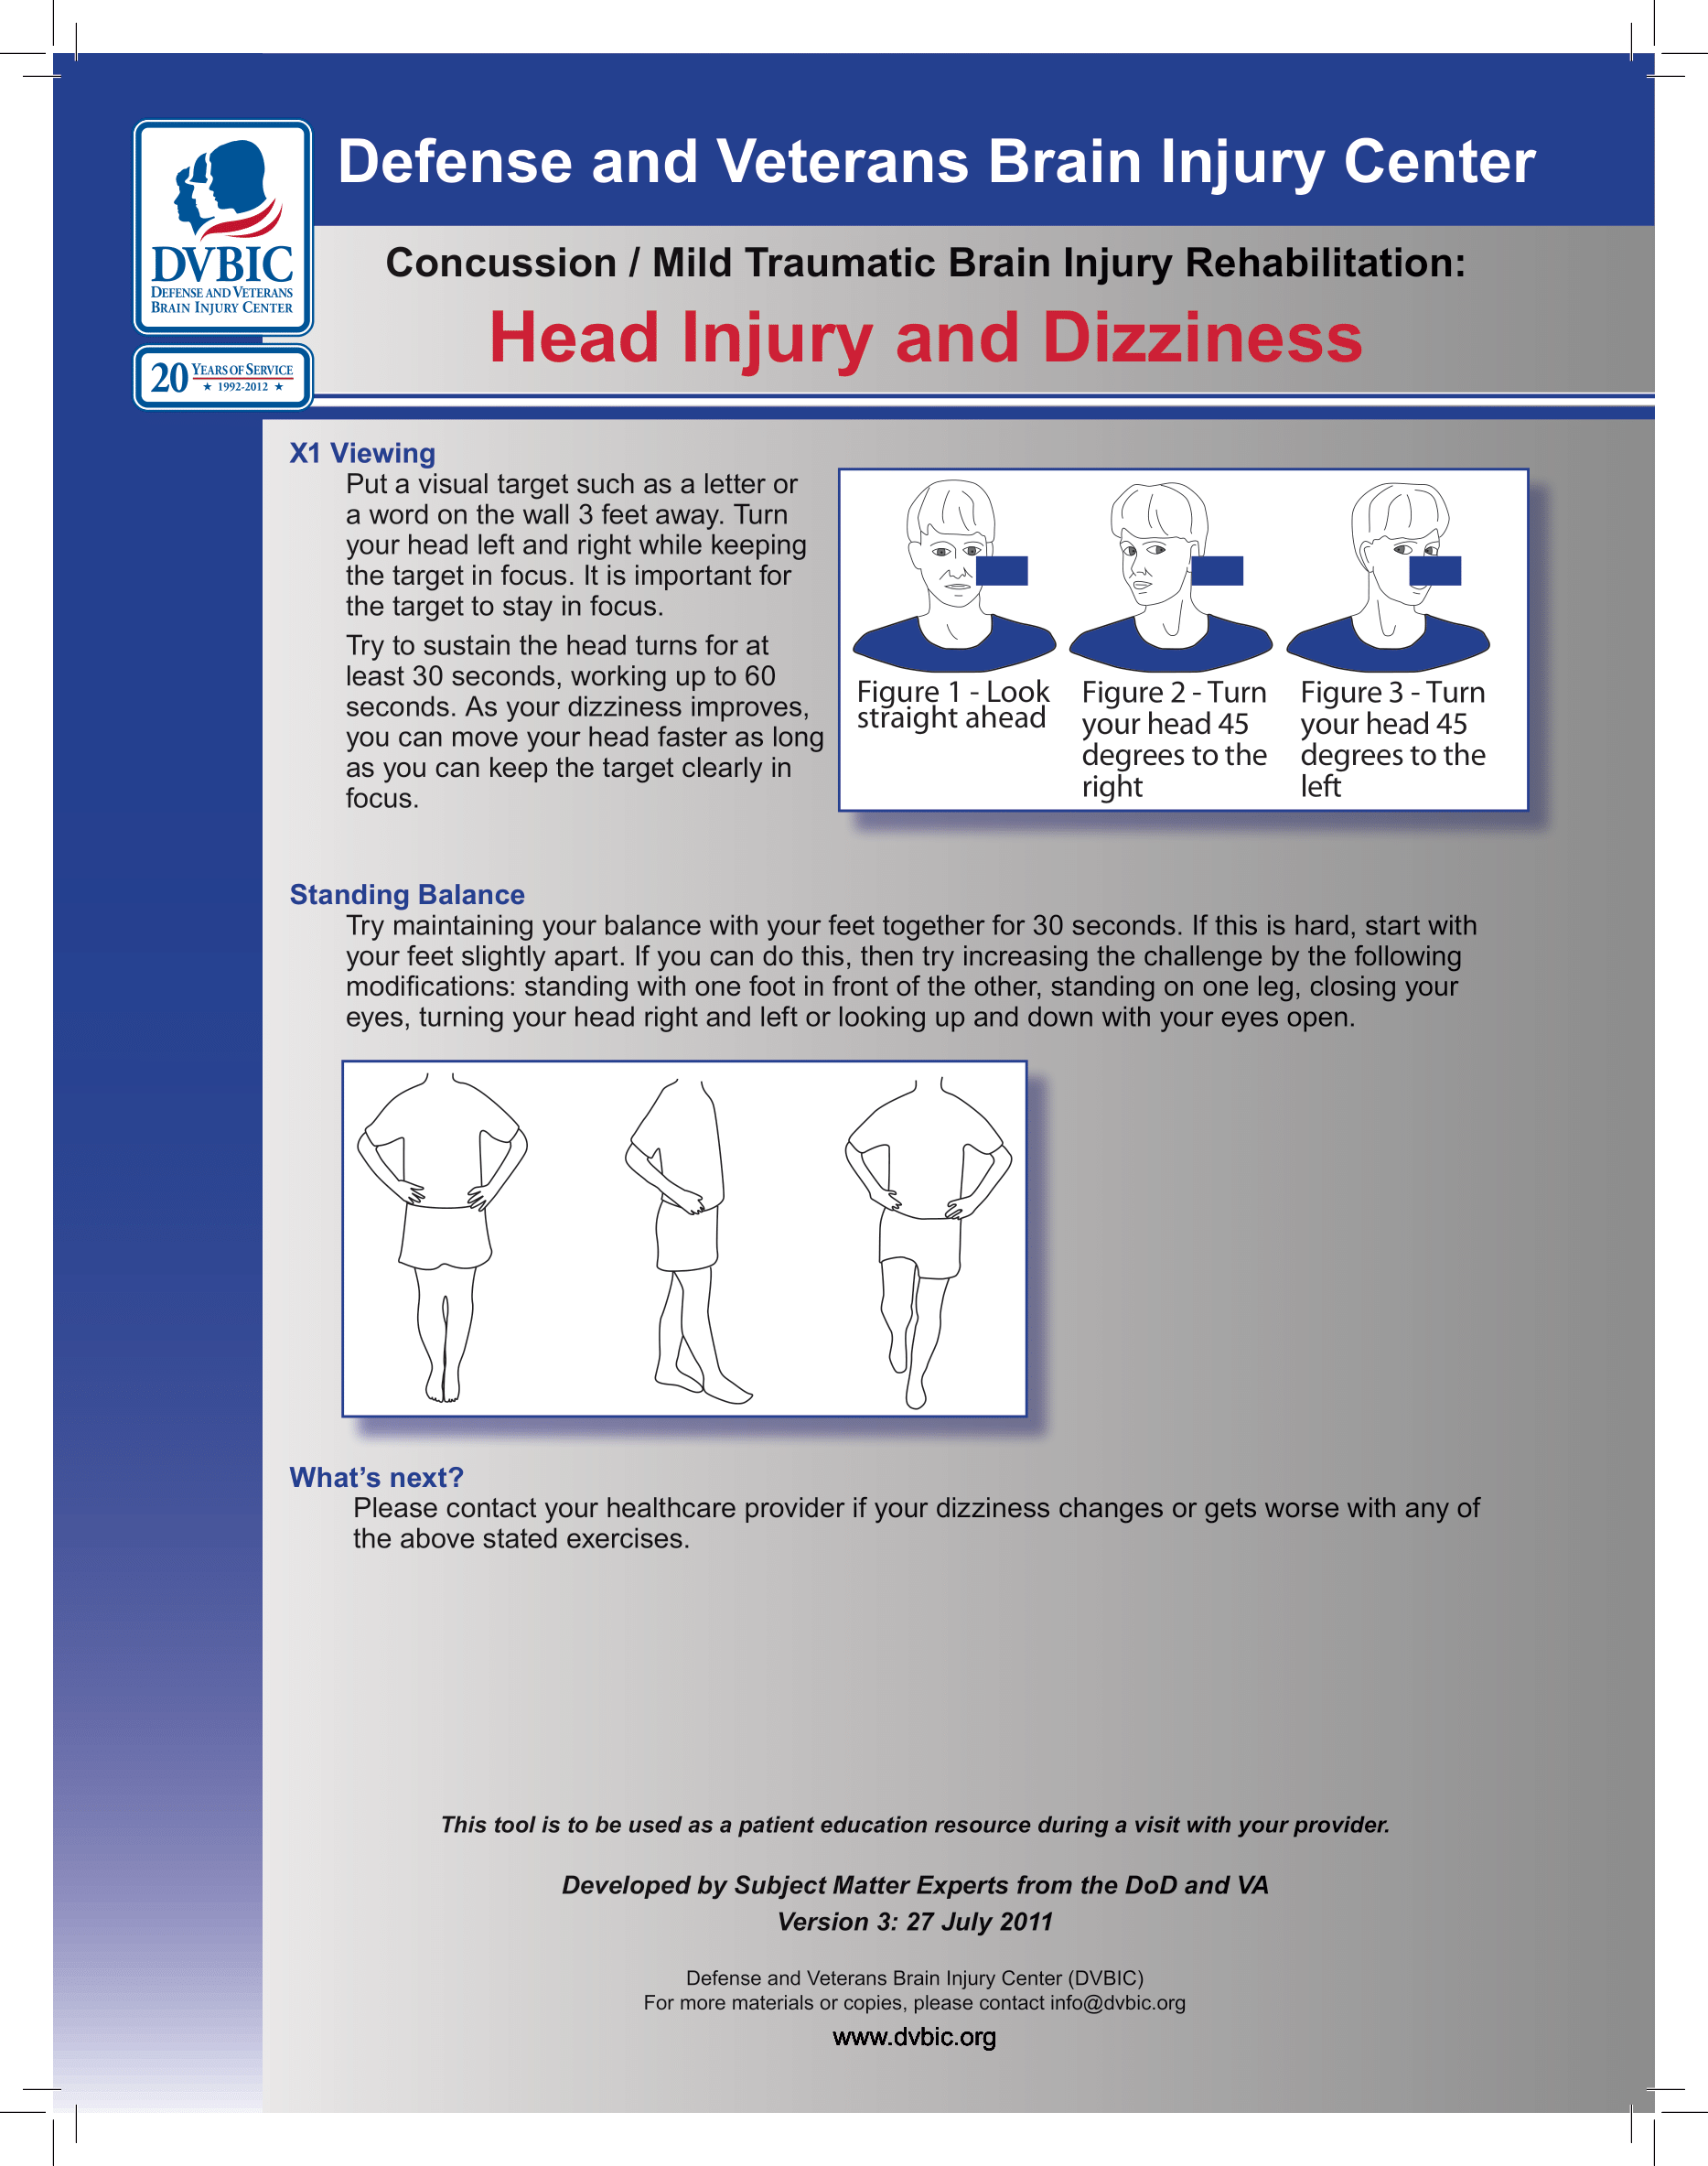 Head Injury and Dizziness